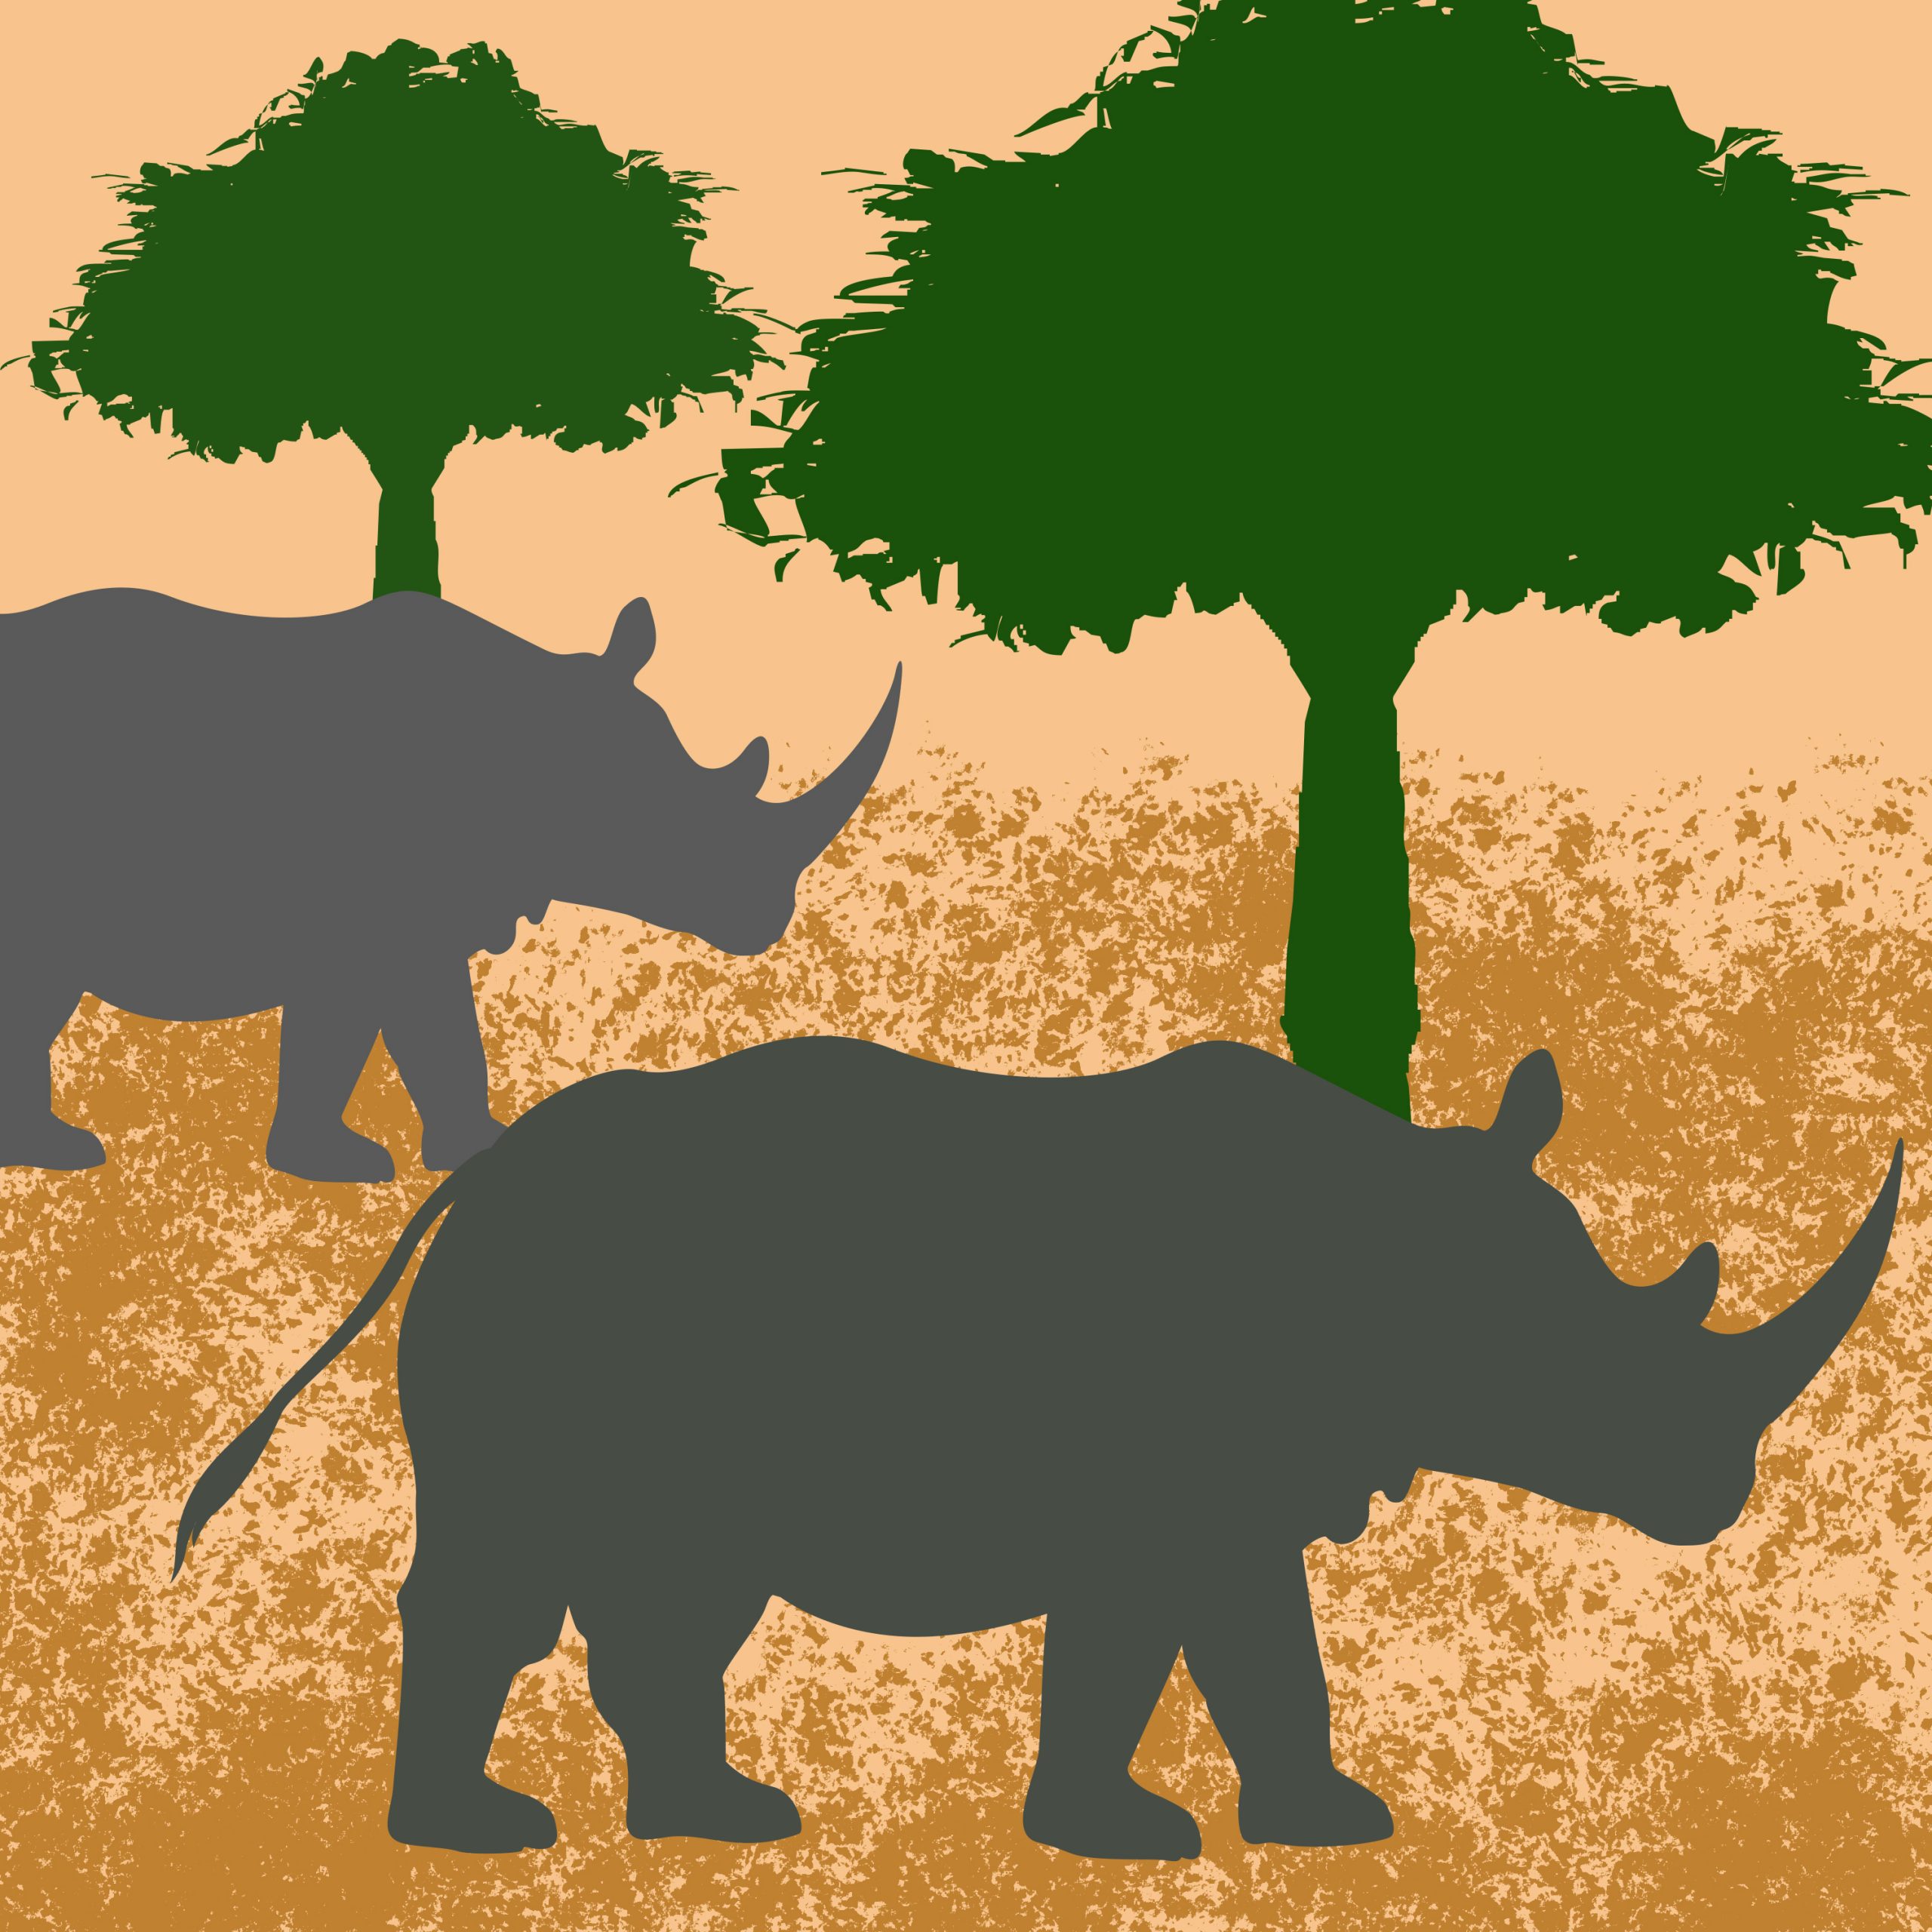 Rhinoceros in a jungle